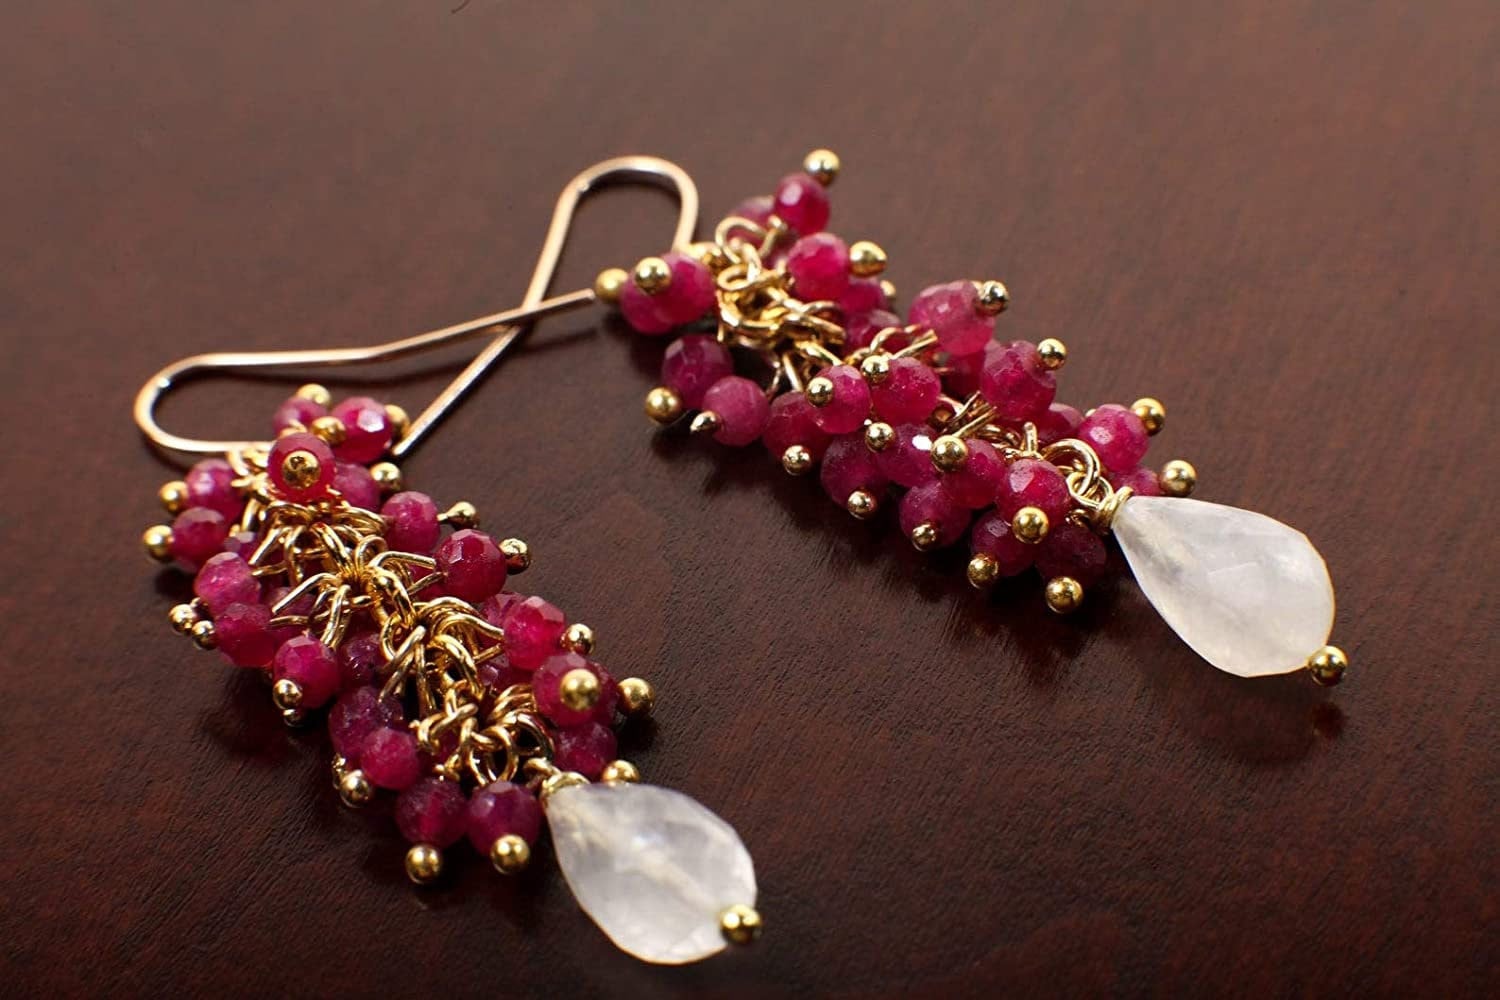 Moonstone Briolette Teardrop, Genuine Pink Ruby Clusters in 14K Gold Filled Earrings, Boho, Gemstone Jewelry Gift for Her